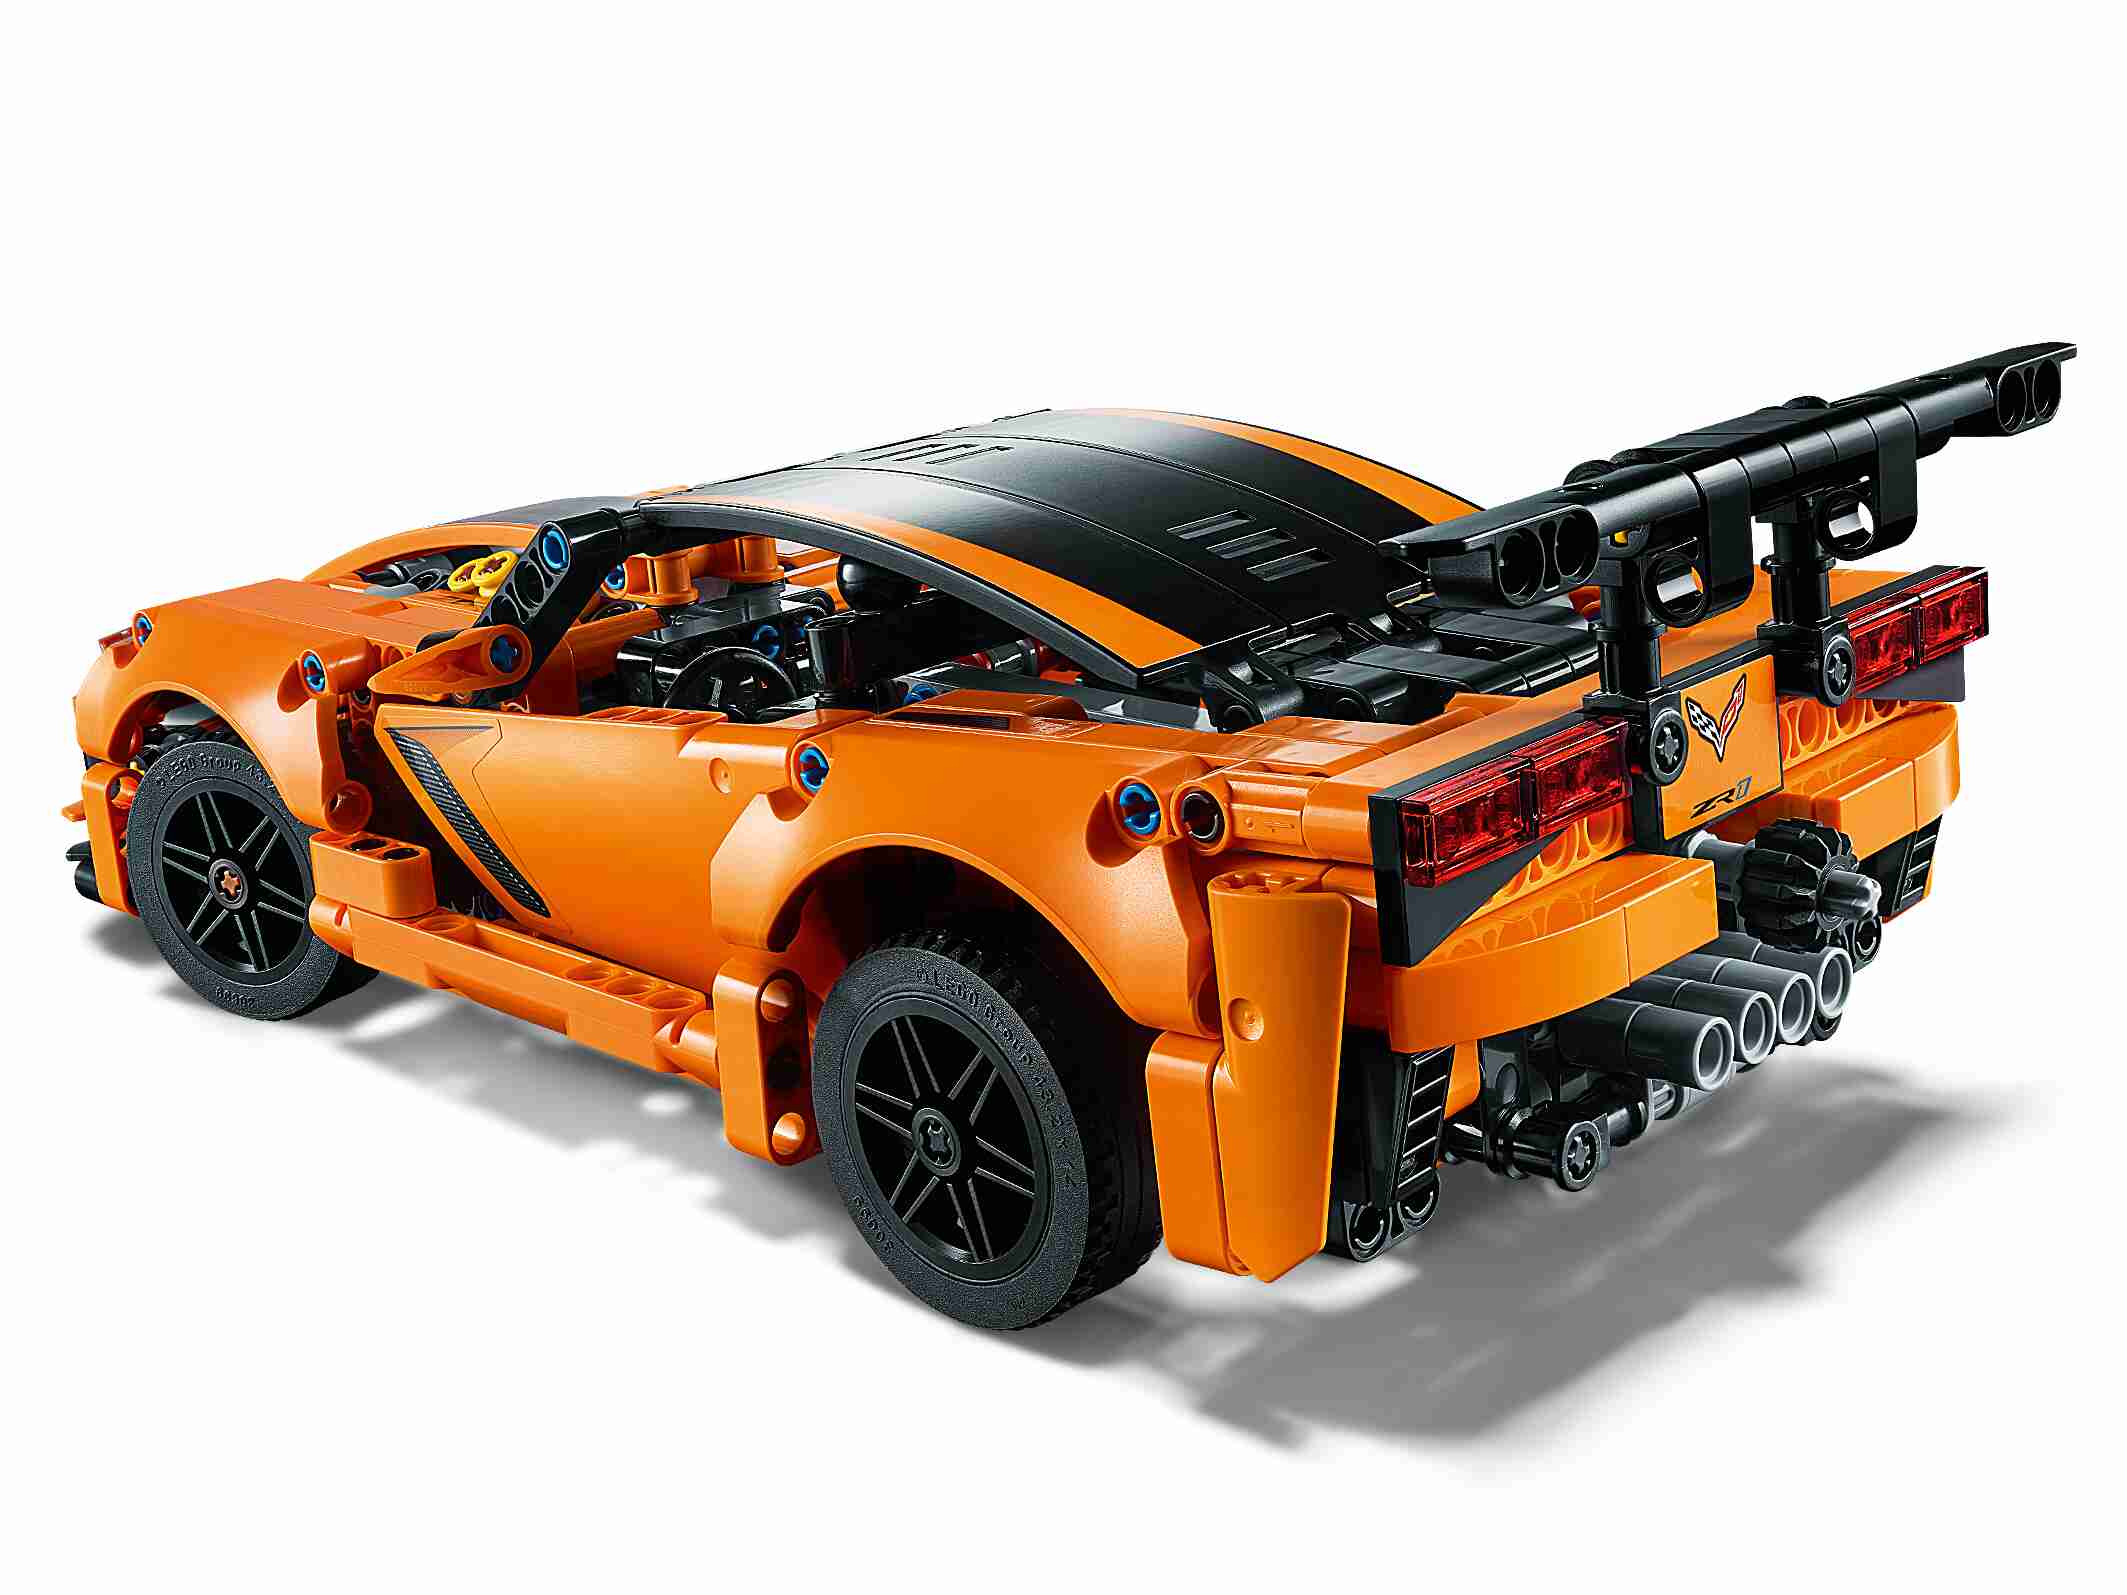 LEGO 42093 Technic Chevrolet Corvette ZR1 Rennwagen oder Hot Rod 2-in-1